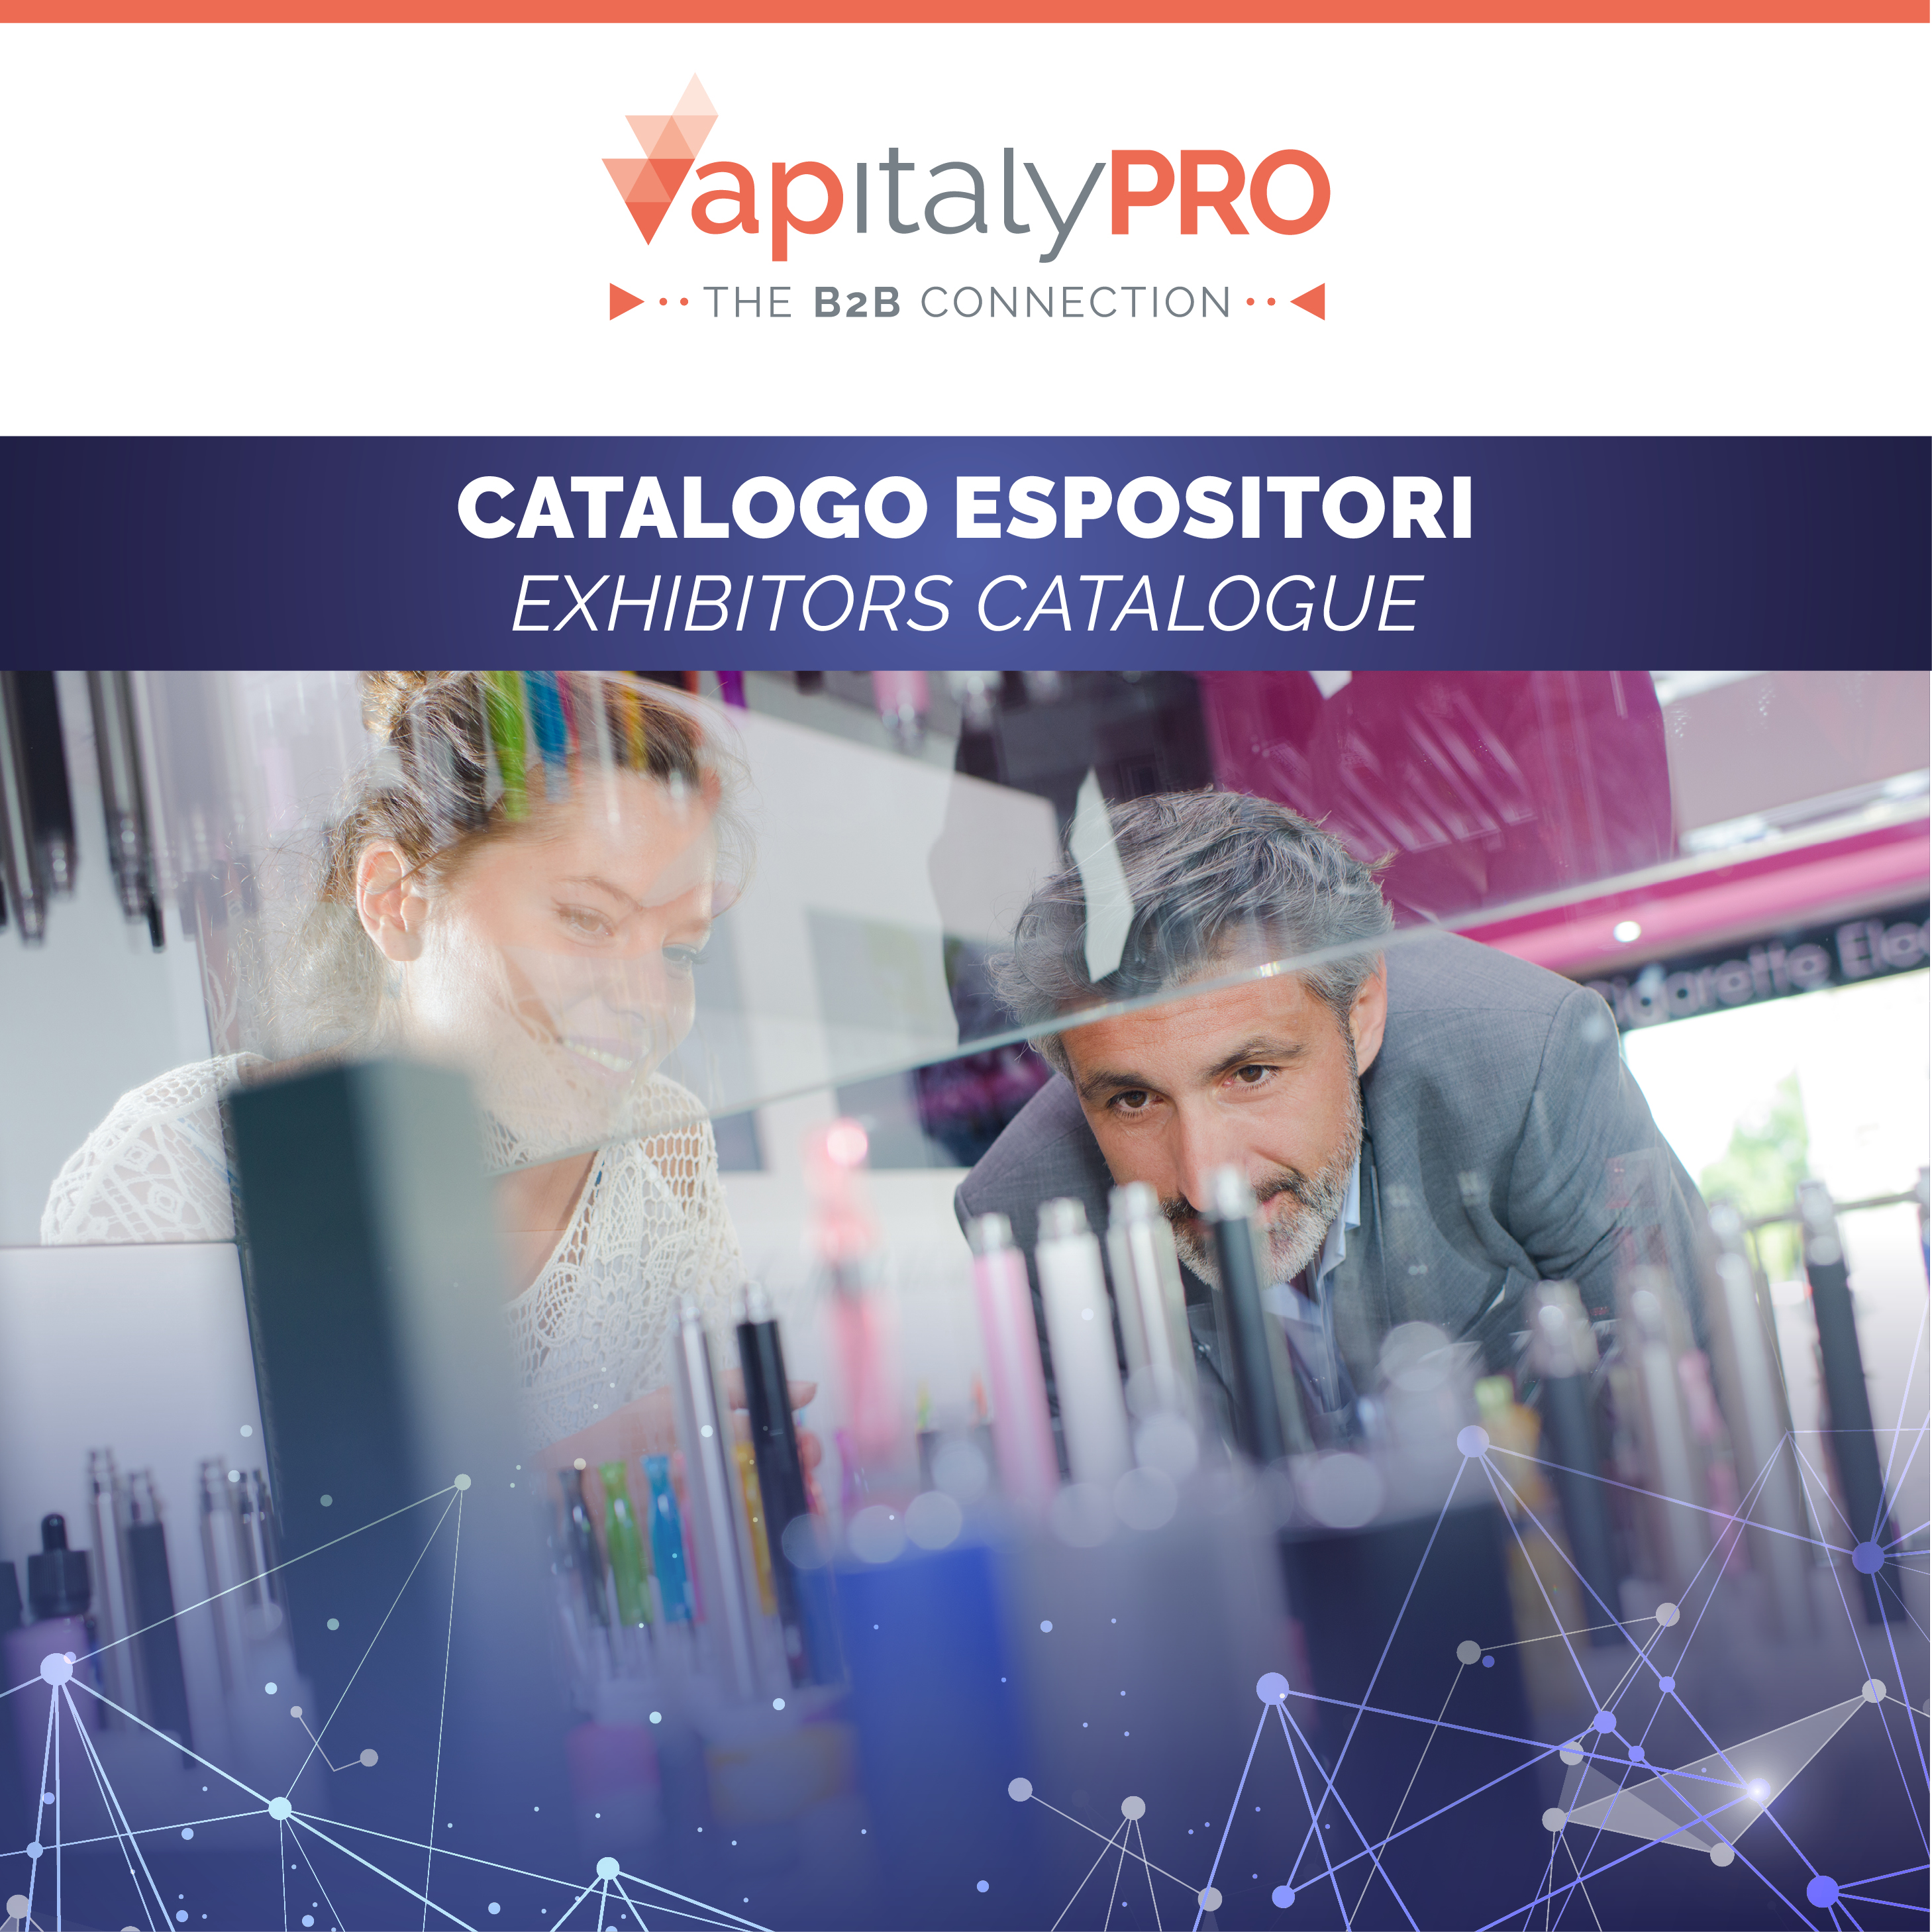 VapitalyPRO 2019: Exhibitor Catalogue online